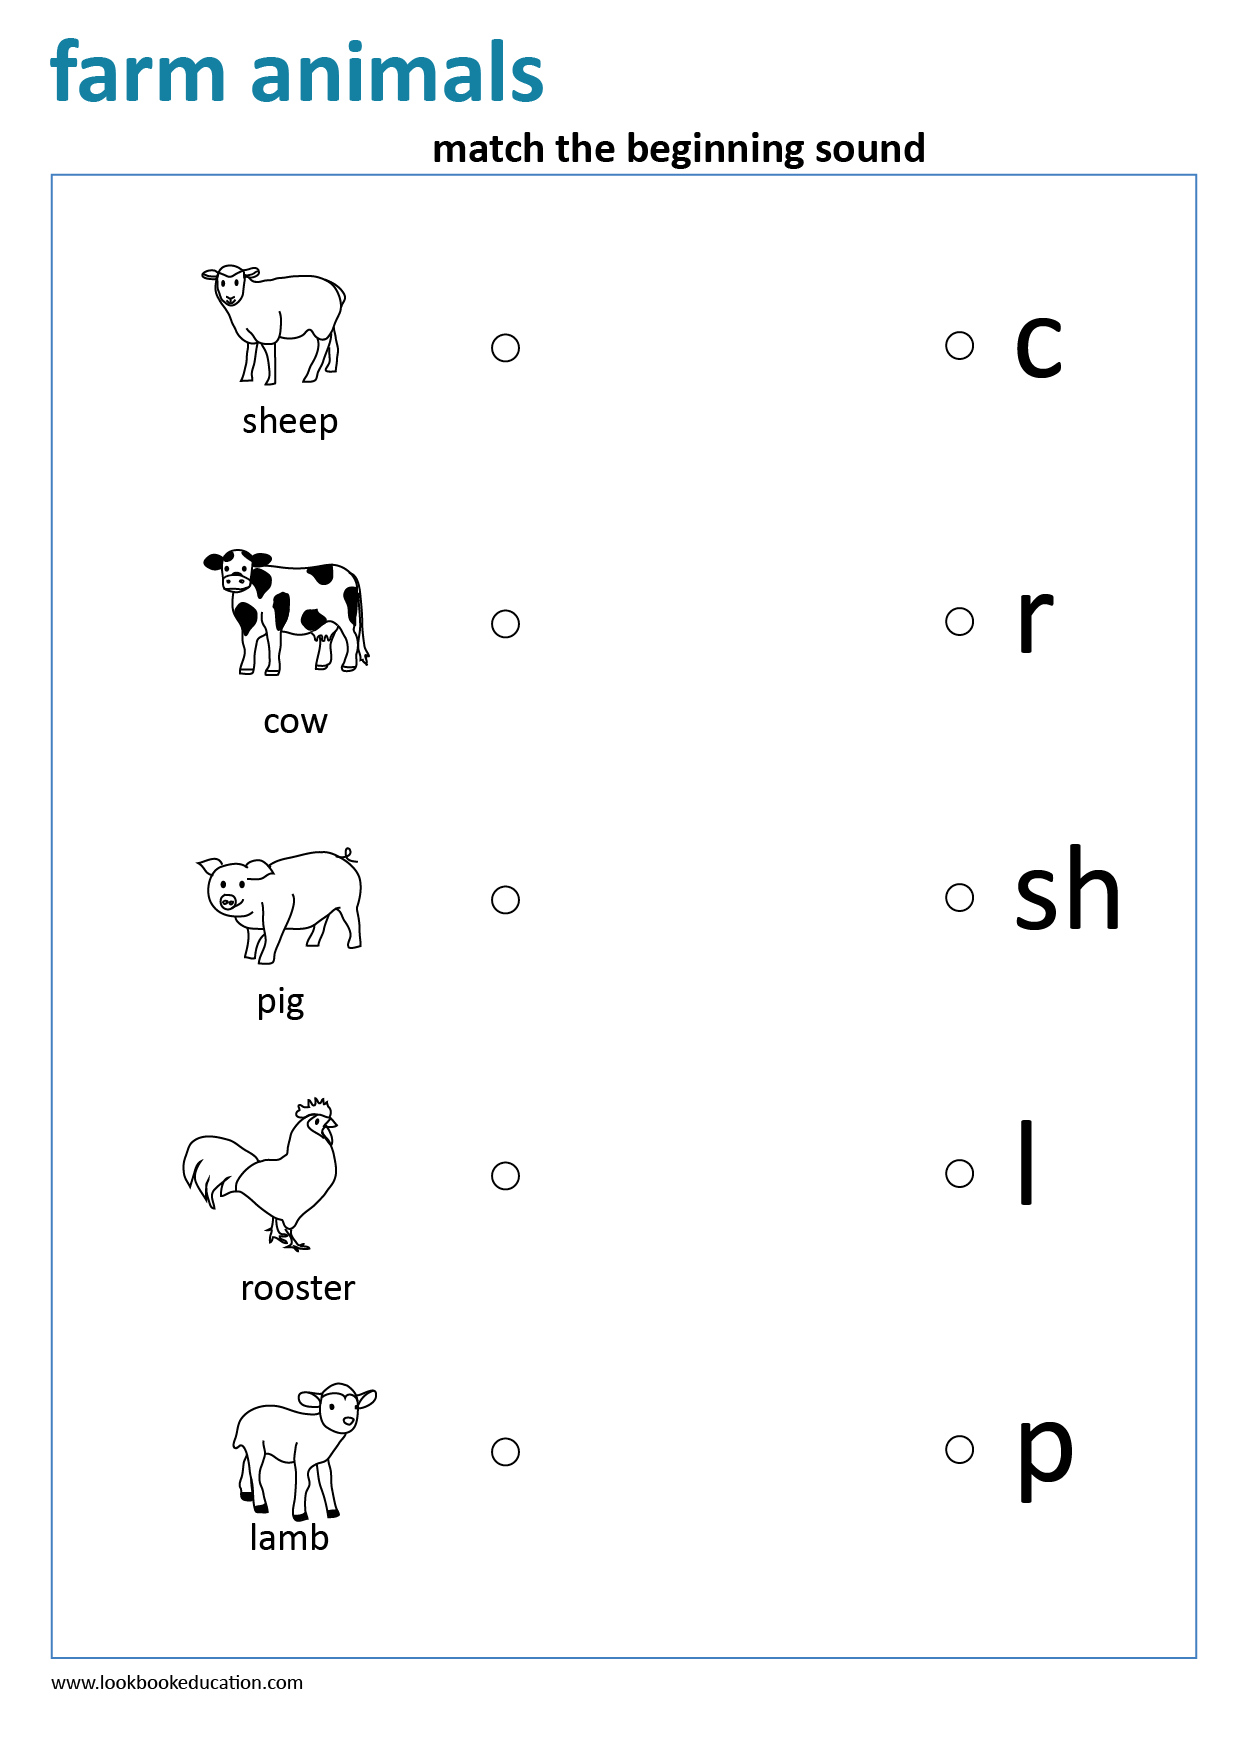 Worksheet Match the Beginning Sound Farm Animals - Lookbook Education